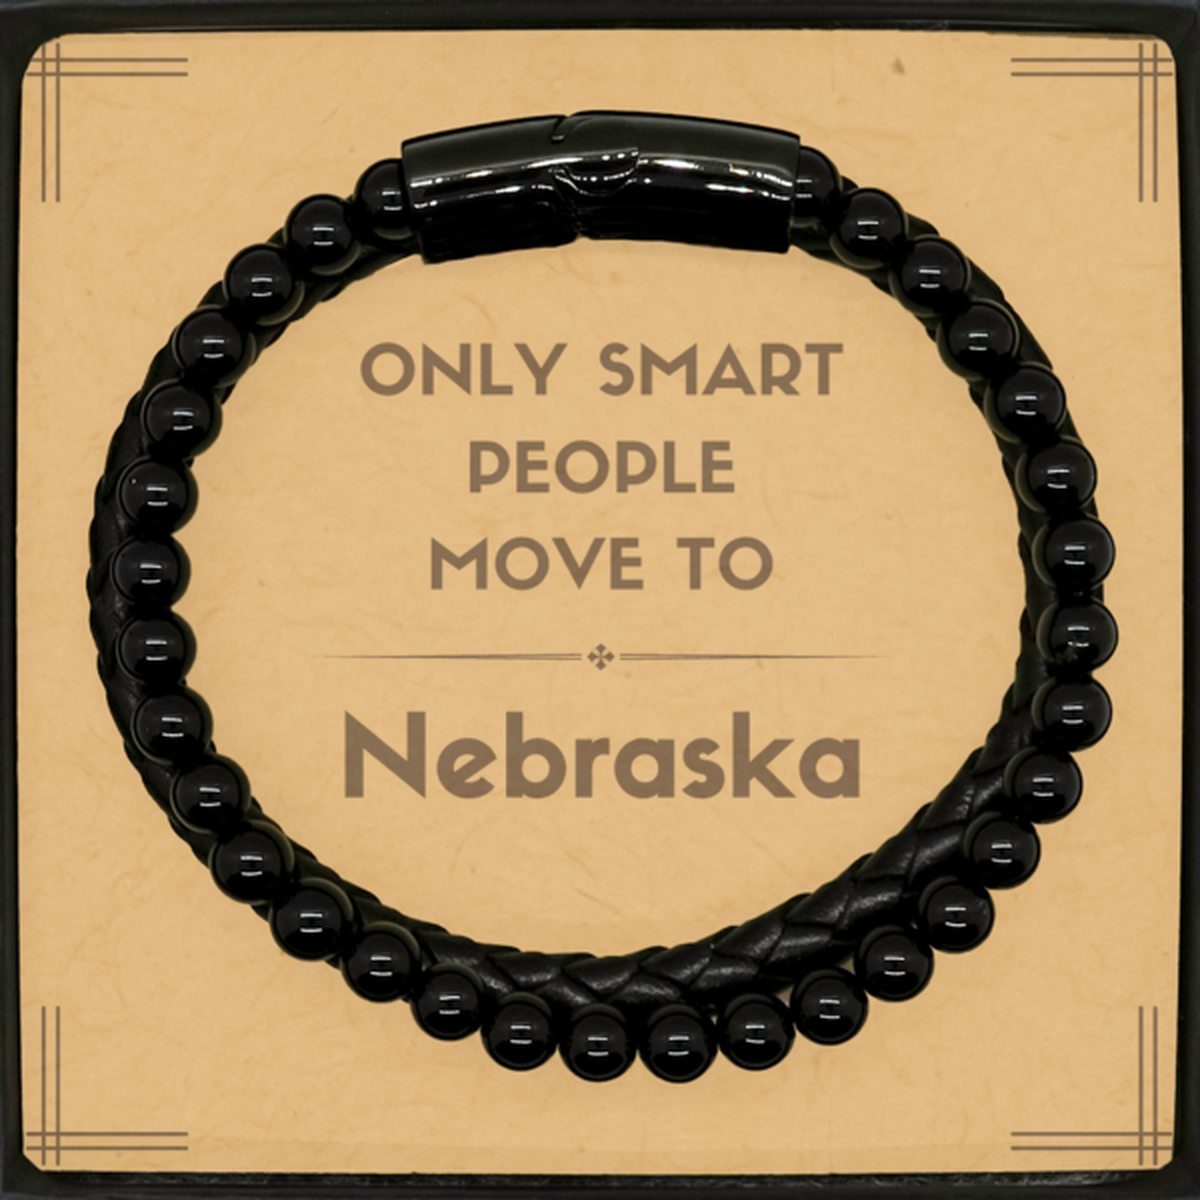 Only smart people move to Nebraska Stone Leather Bracelets, Message Card Gifts For Nebraska, Move to Nebraska Gifts for Friends Coworker Funny Saying Quote